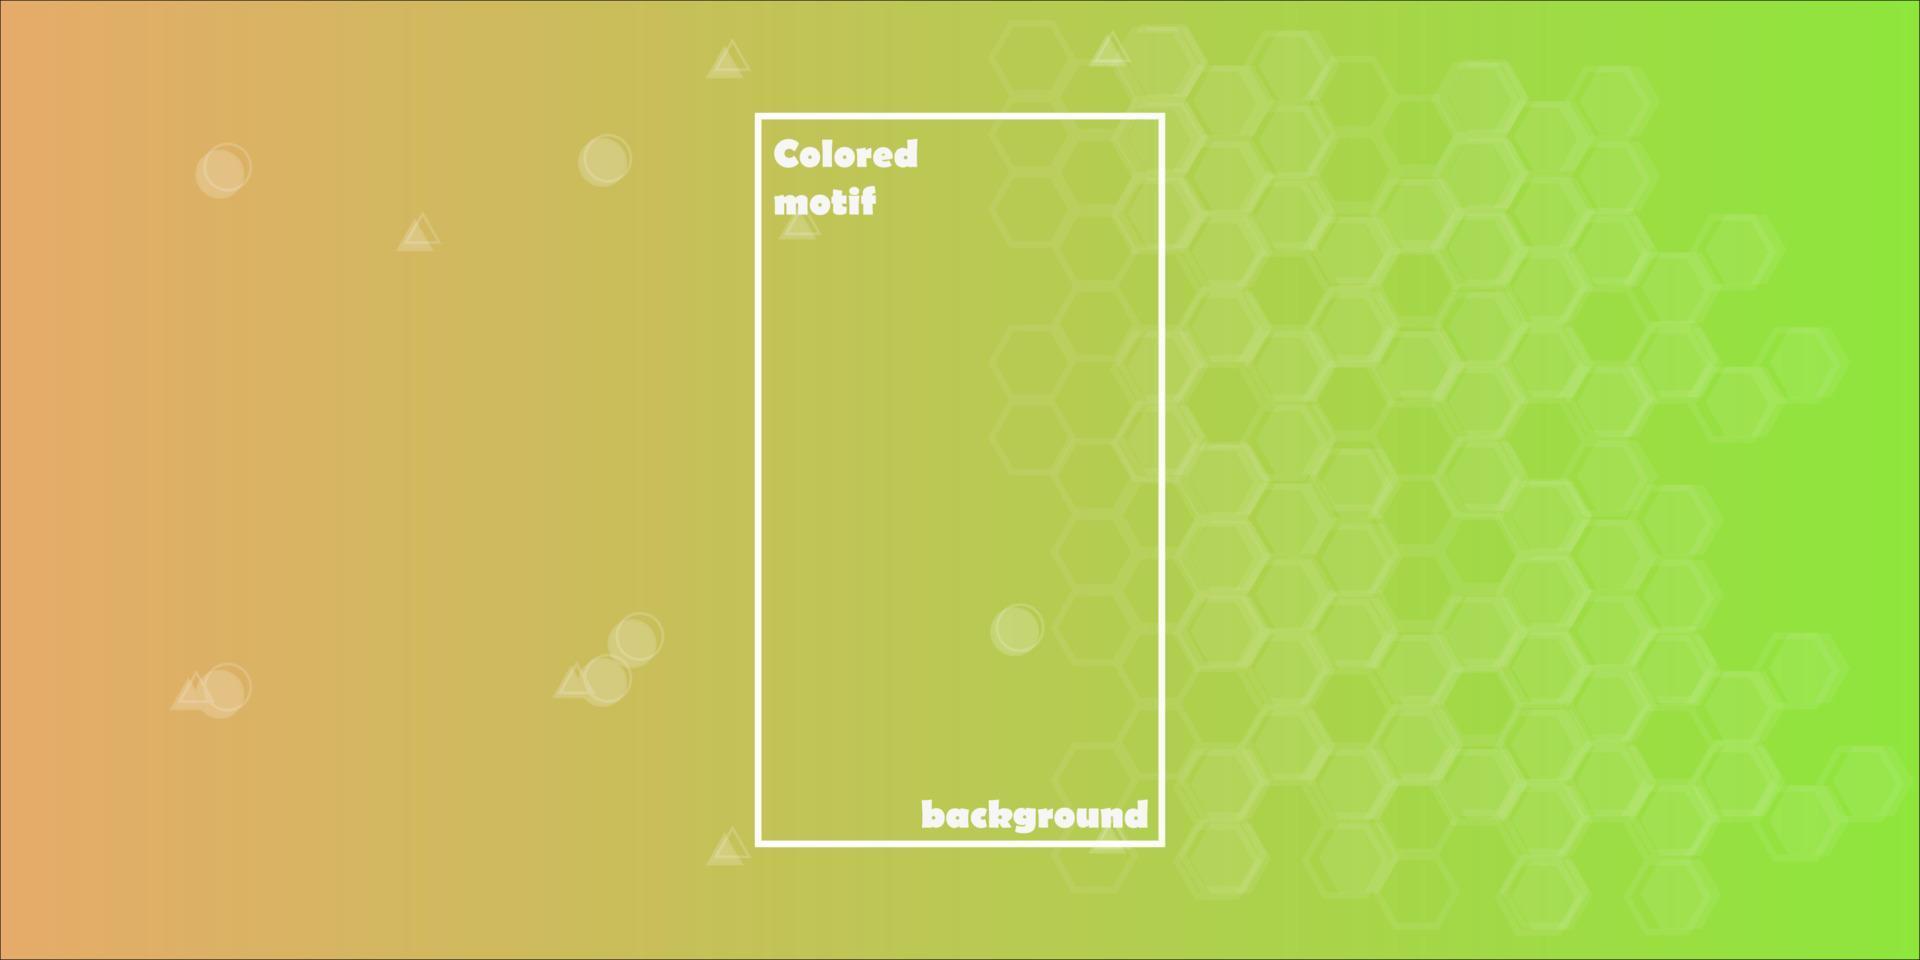 conjunto de fondos abstractos horizontales con un patrón rectangular en colores degradados naranja y verde. colección de texturas degradadas con adornos geométricos. volante, pancarta, portada, afiche o web vector